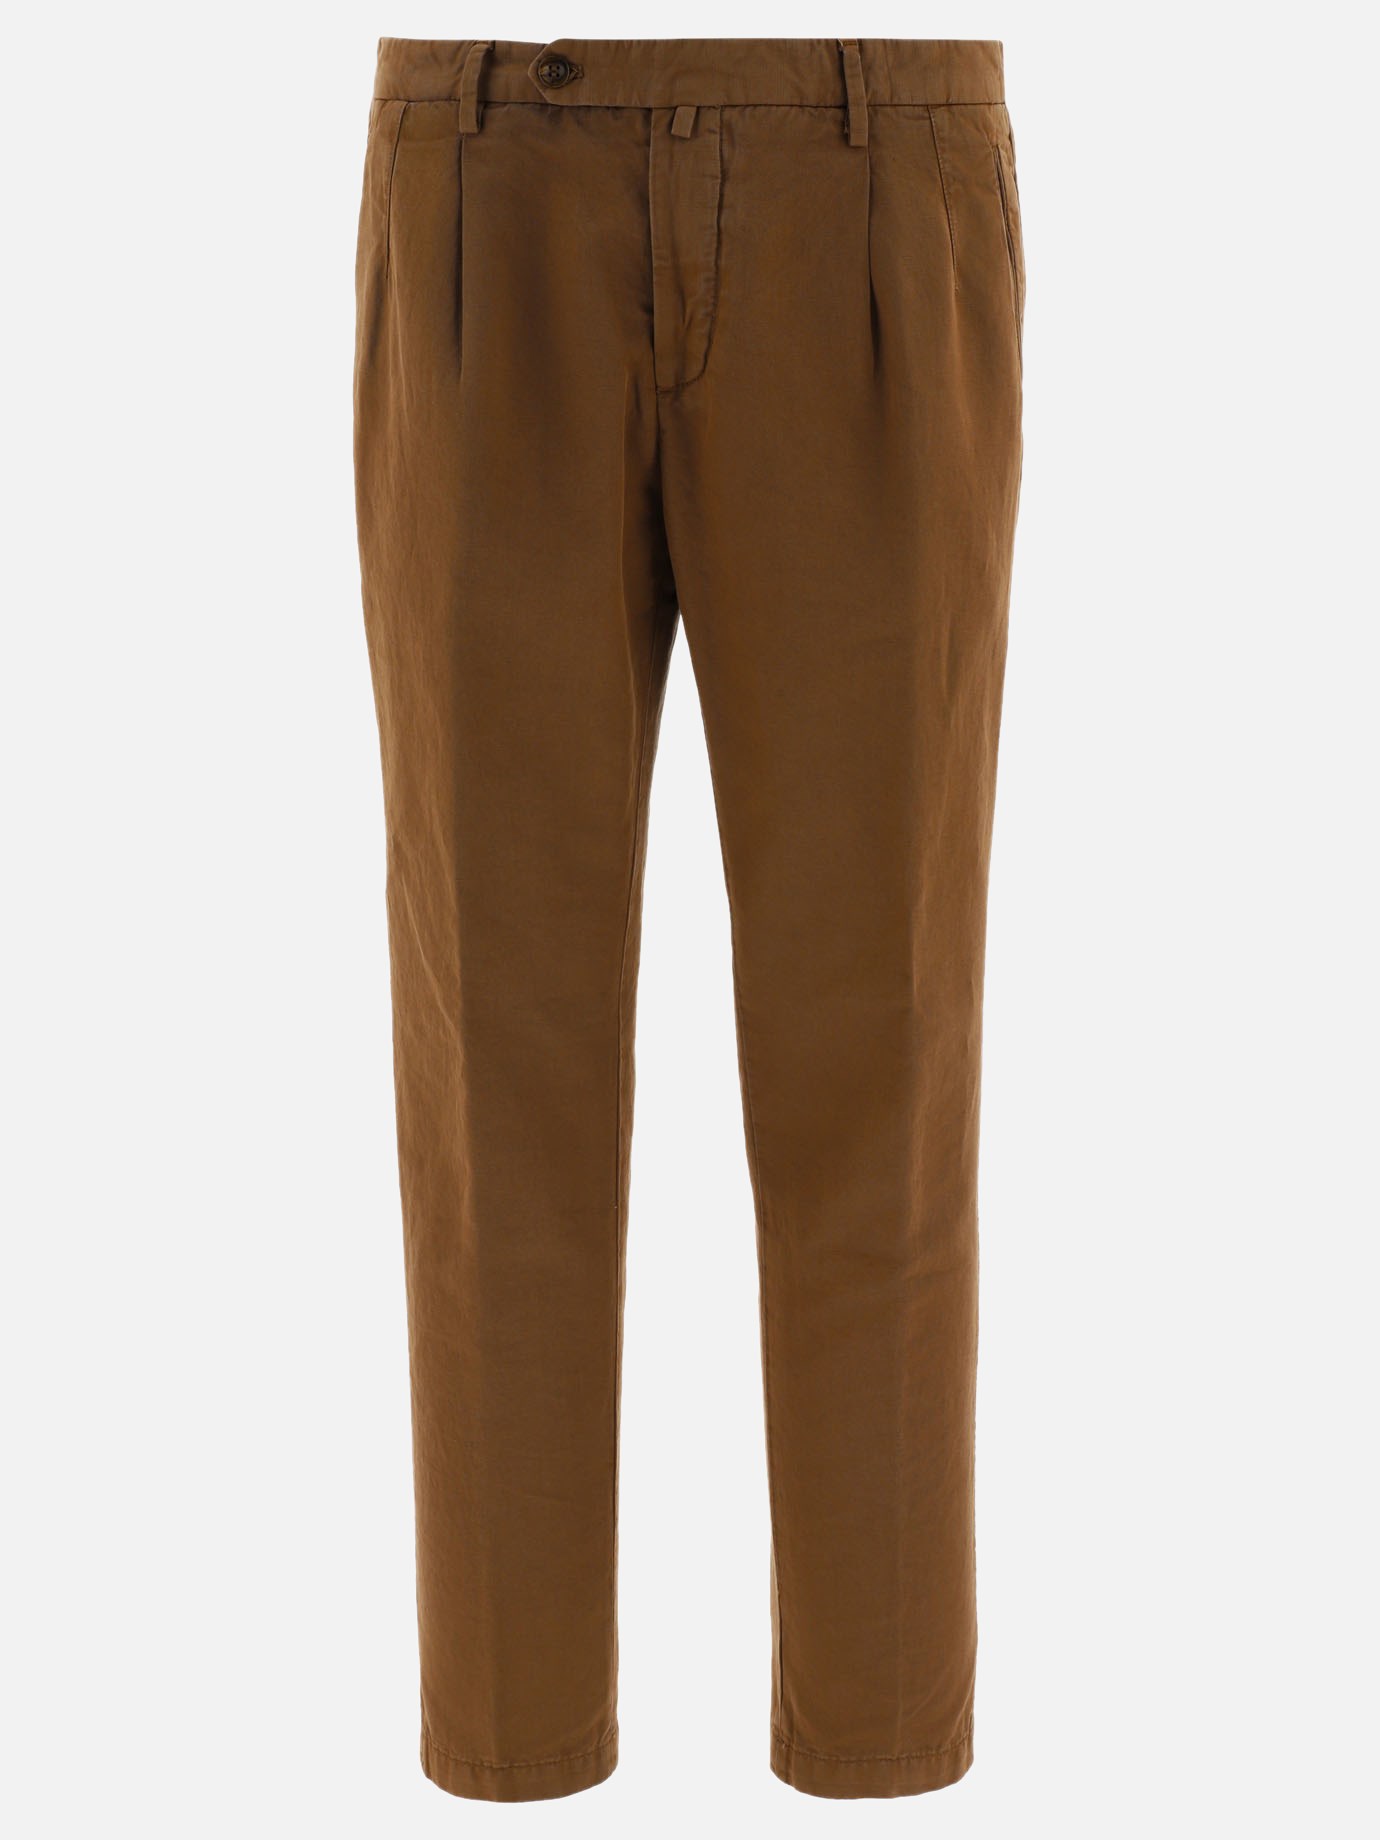 Pantaloni  Cernobbio by Briglia 1949 - 2